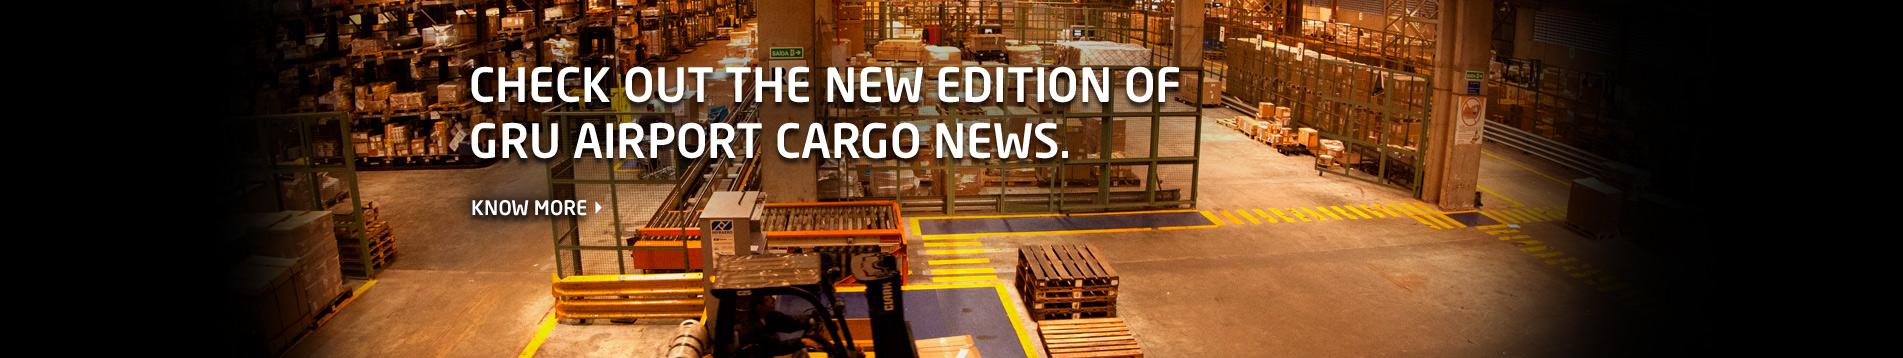 Cargo News7 Eng